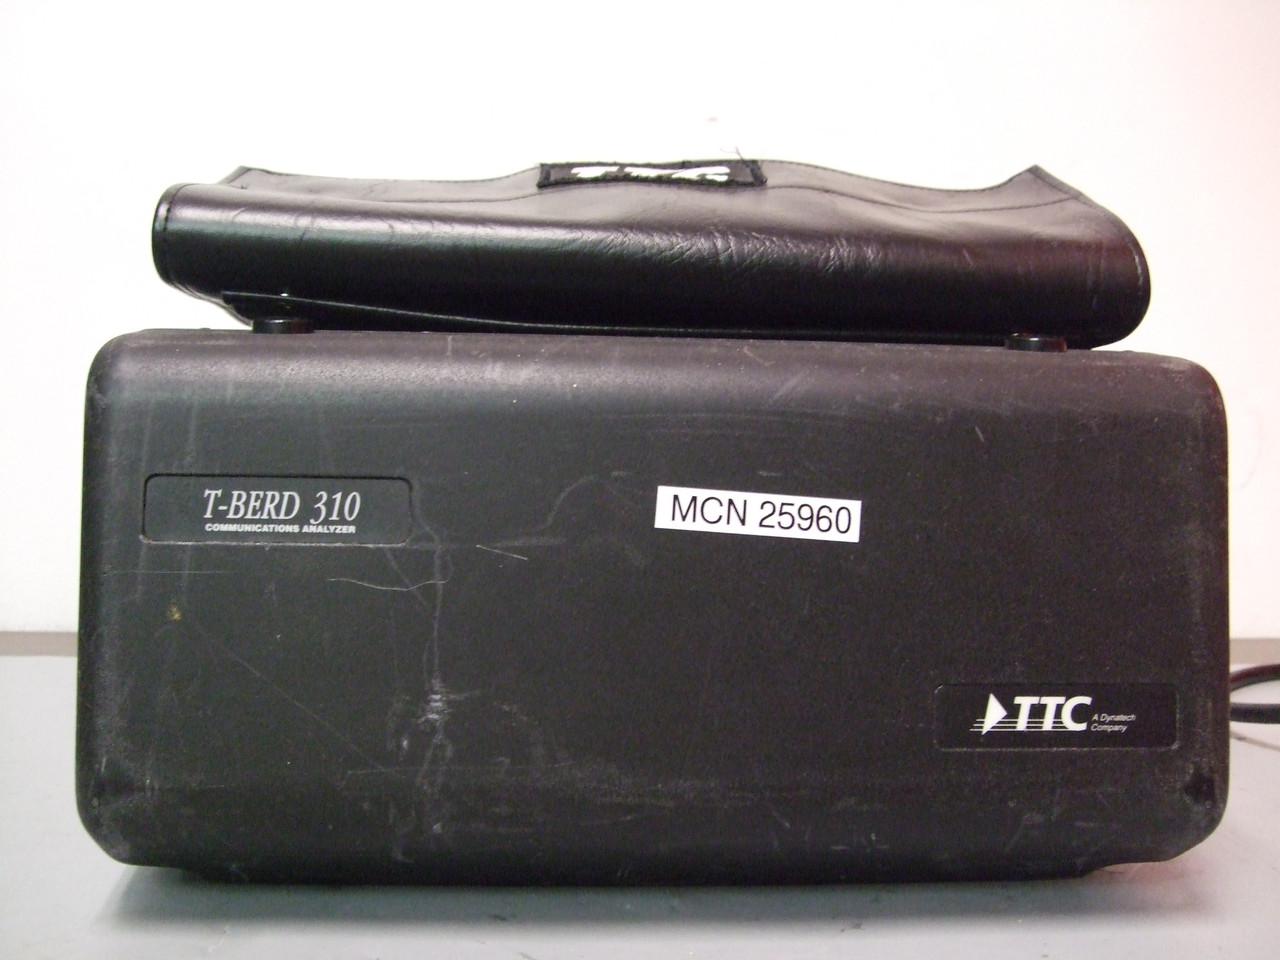 TTC T-BERD 310 Communications Analyzer